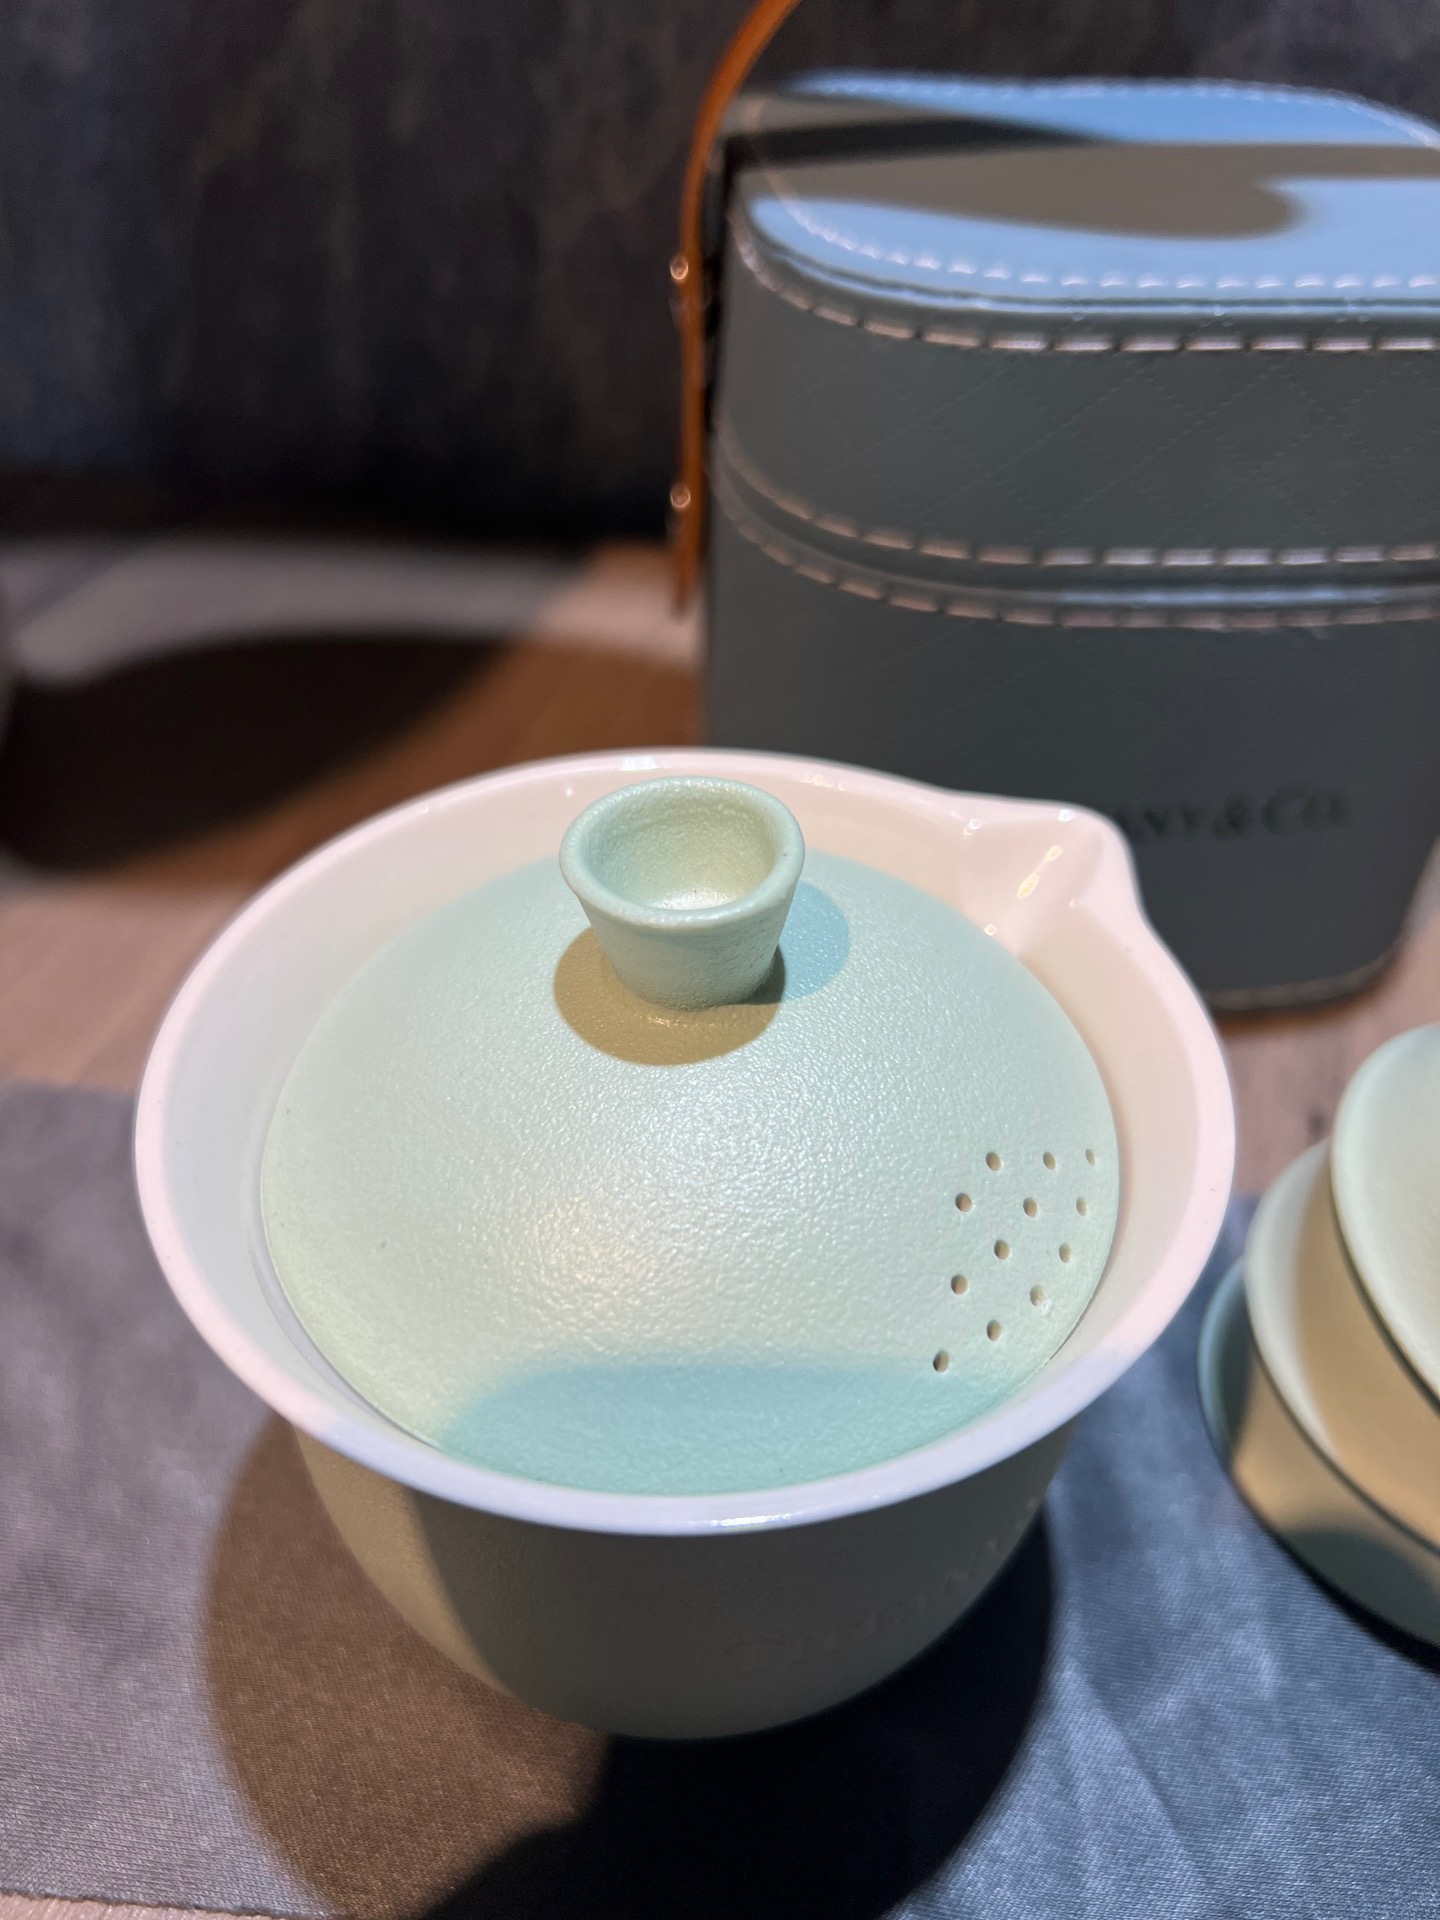 Blaues Designer-Reise-Teeset, tragbares Keramik-Teeset, Lazy One Pot, drei Tassen, Outdoor-Camping, klassische Logo-Teetasse mit PU-karierter Tragetasche